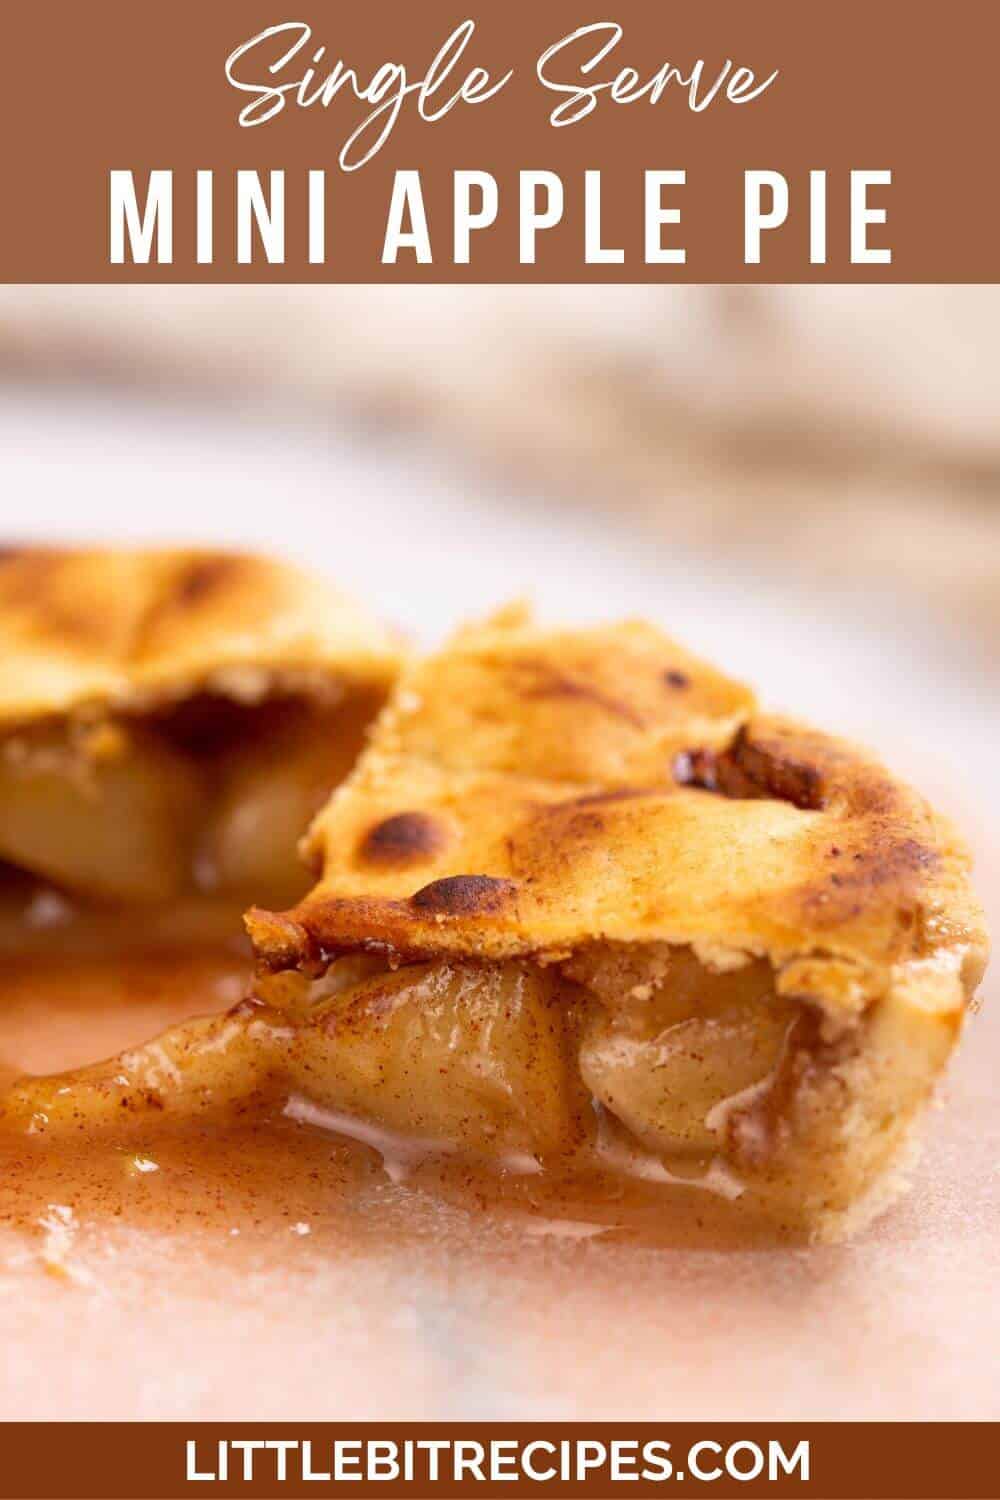 mini apple pie sliced with text.